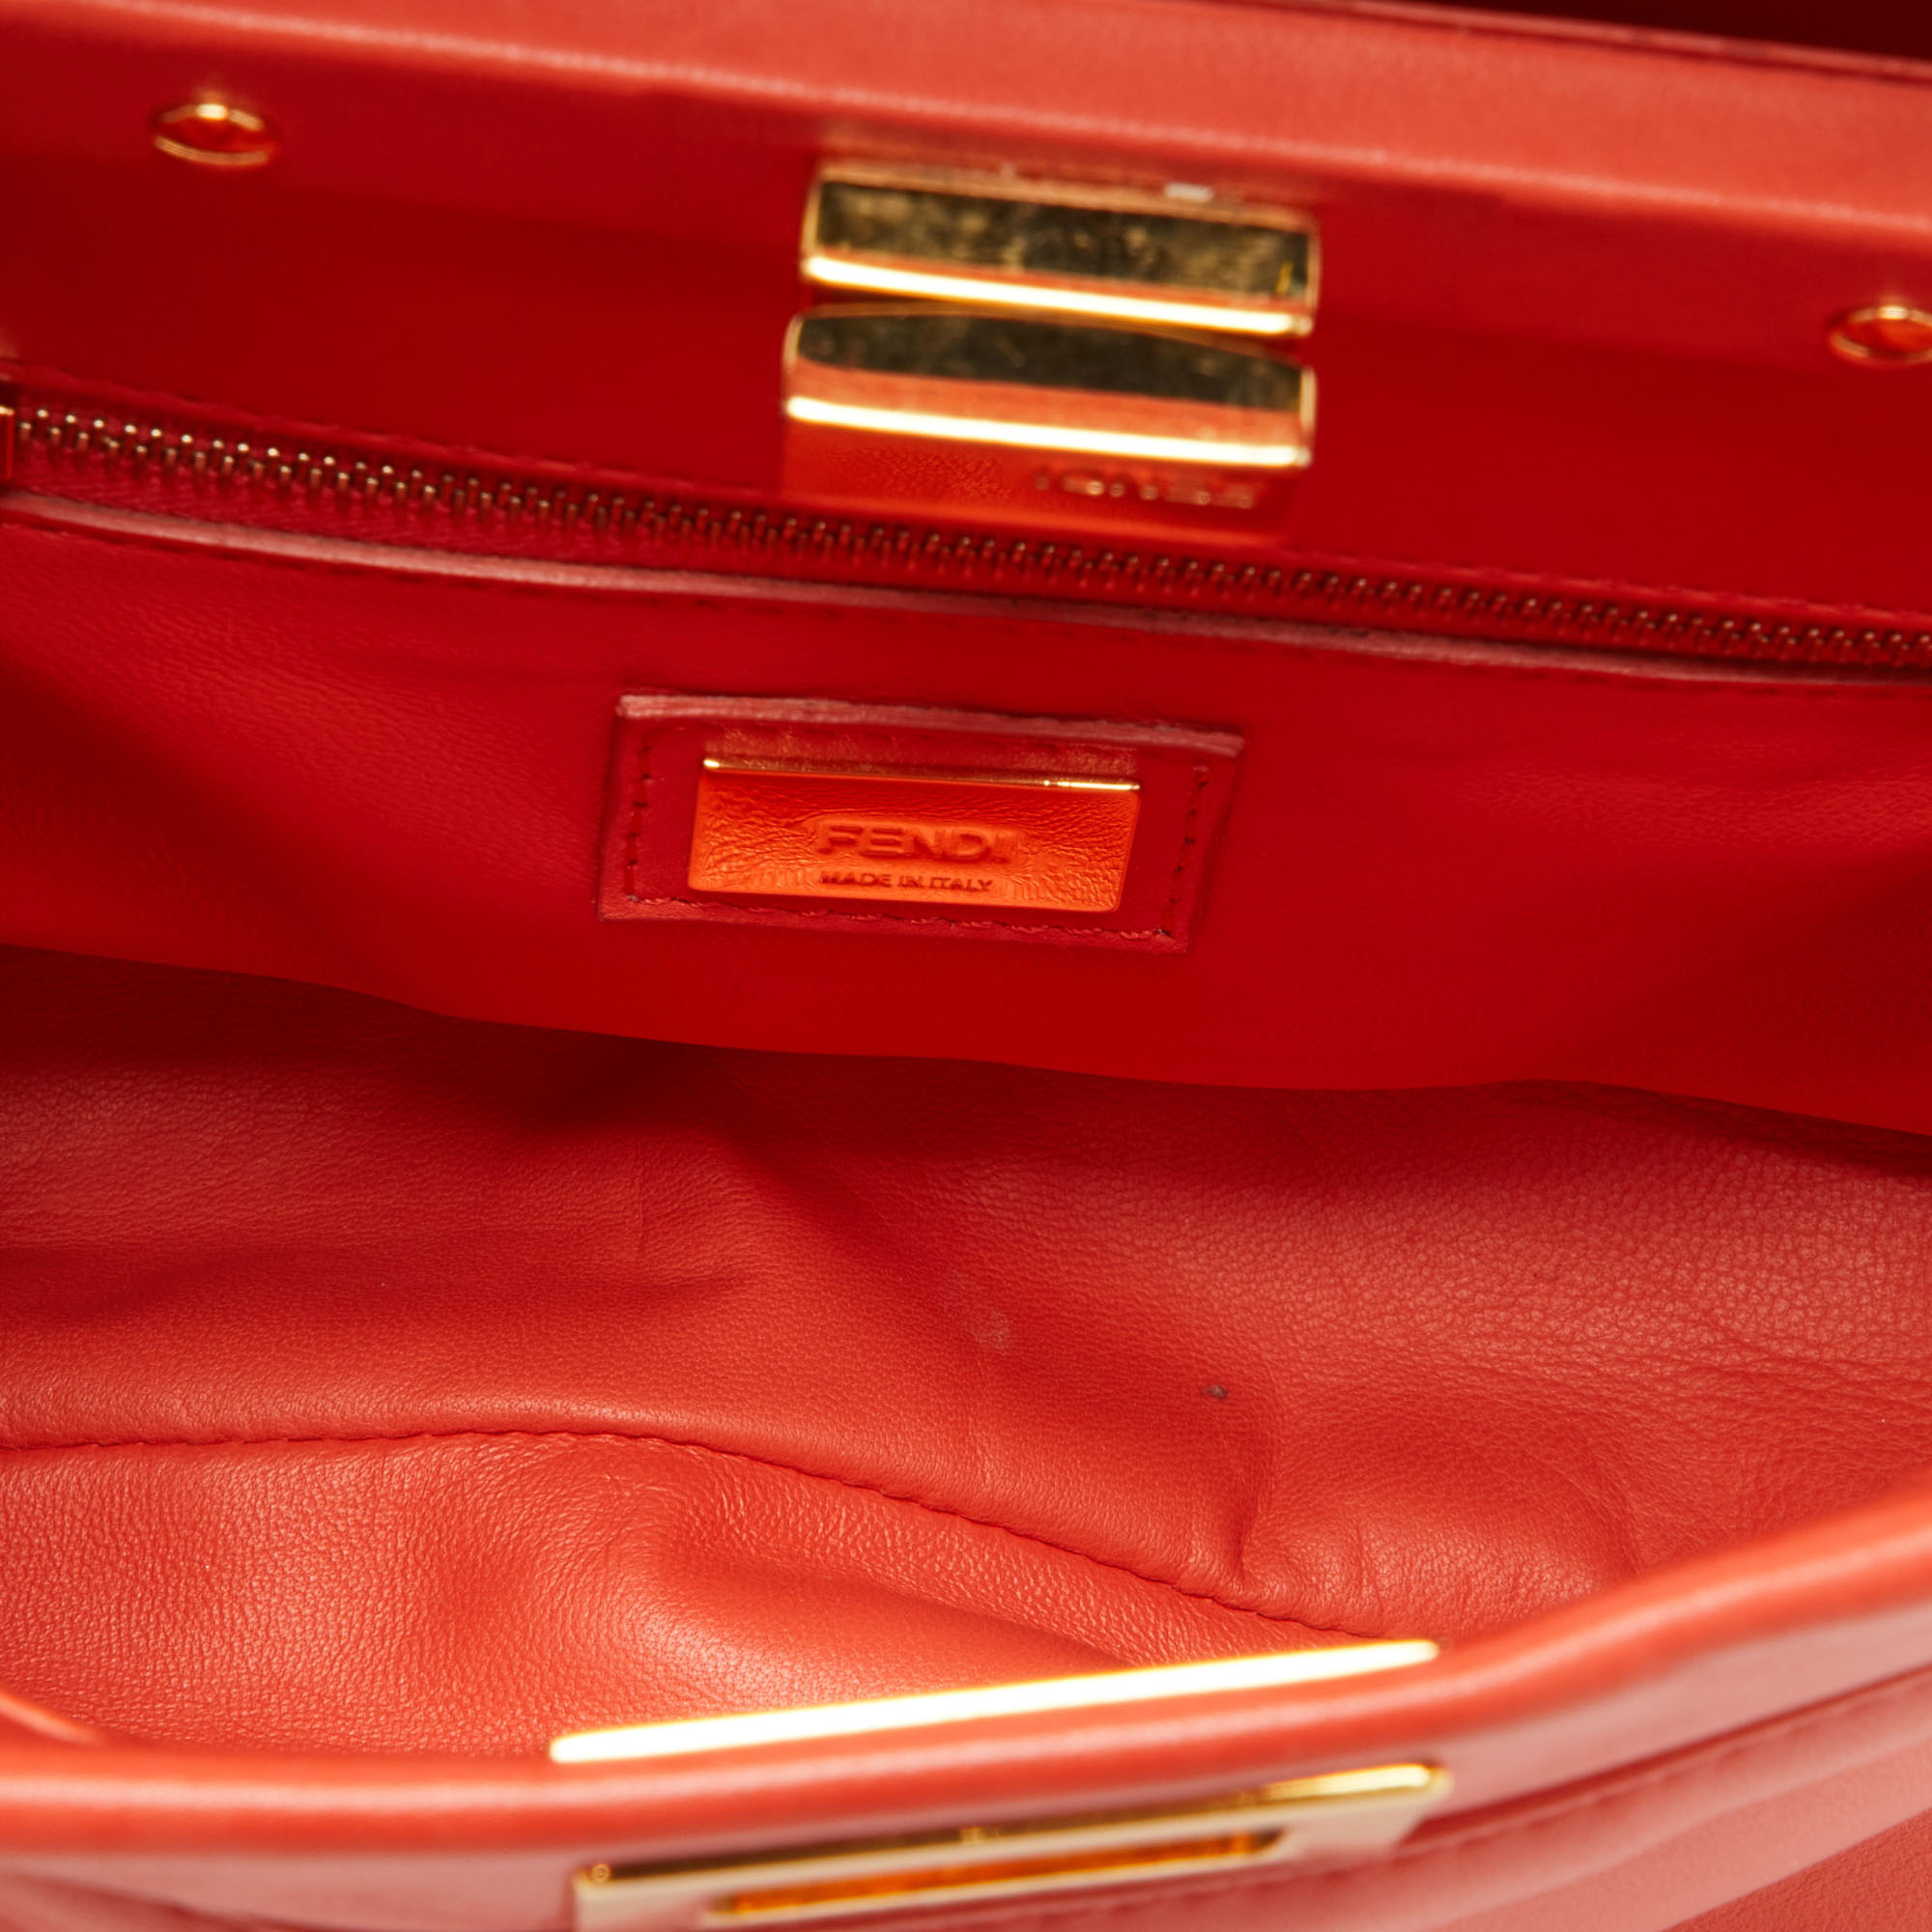 Fendi Orange Leather Mini Peekaboo Top Handle Bag